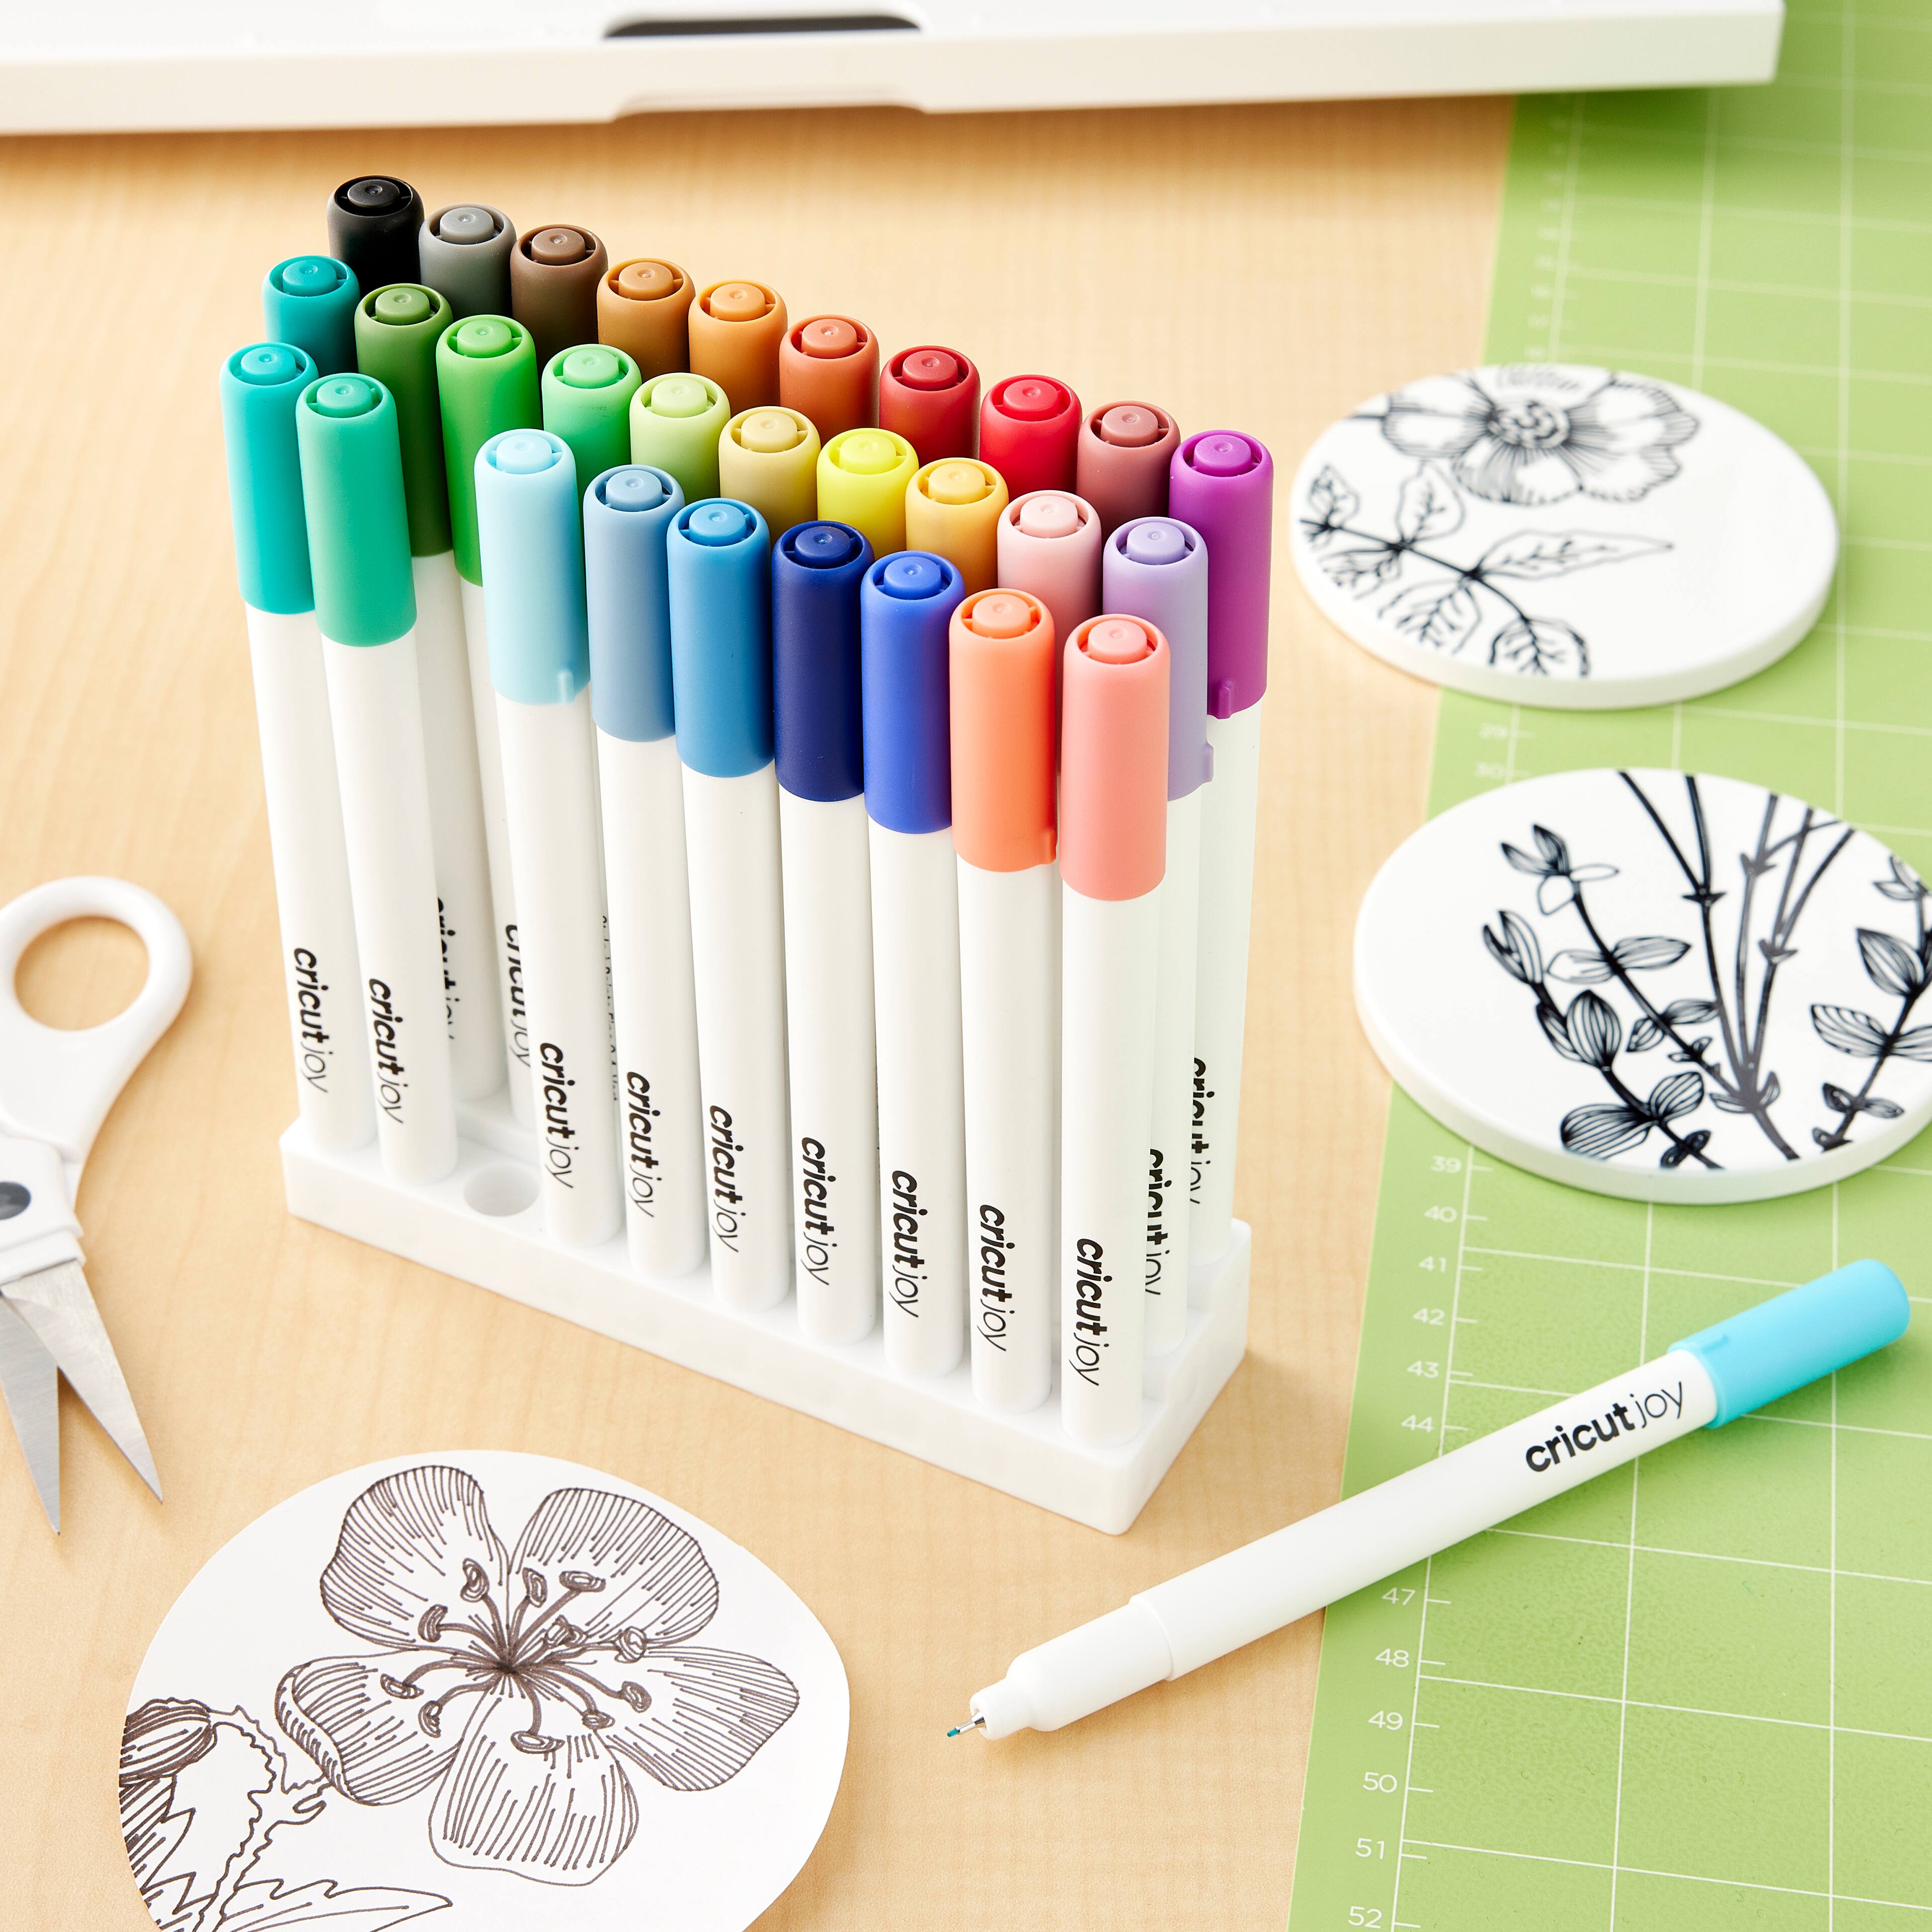 30 Genuine Cricut Joy Ultimate Fine Point Pen Set, Markers, also